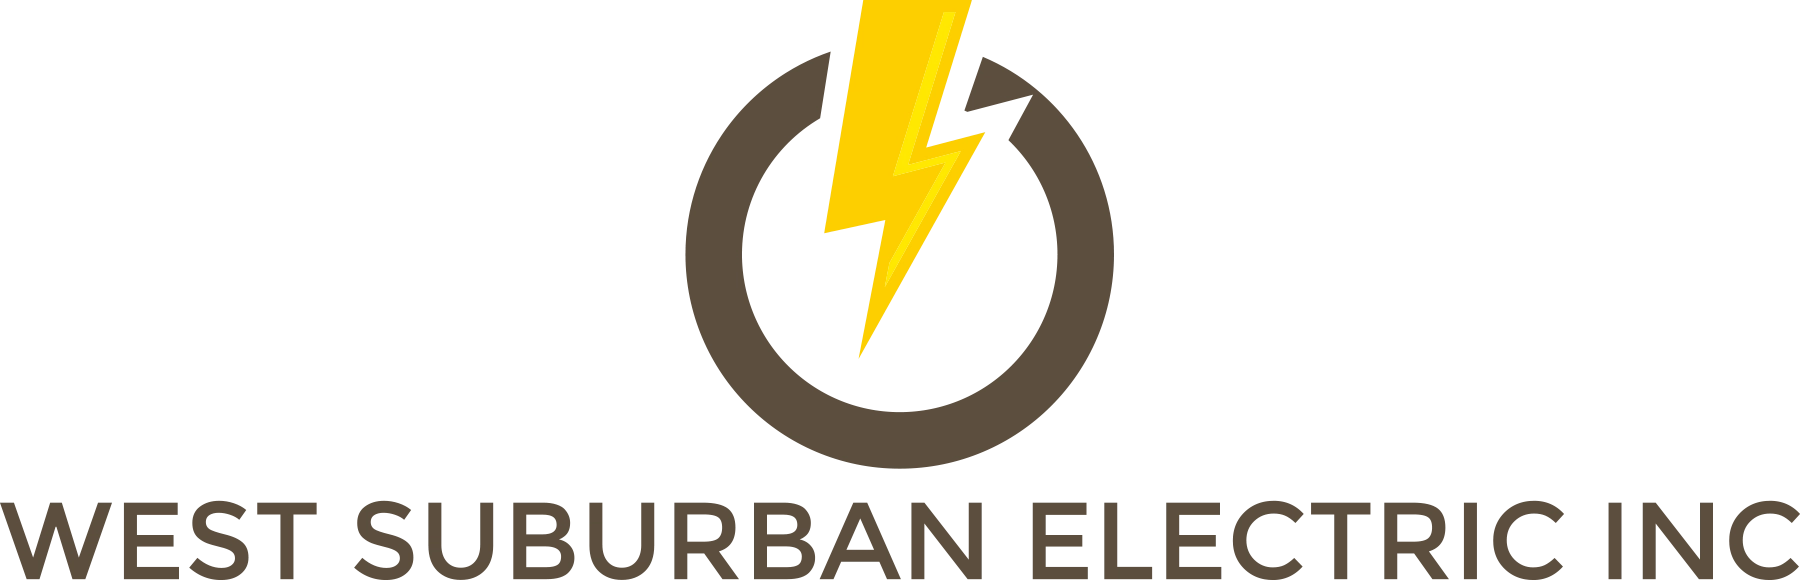 West Suburban Electric, Inc Logo